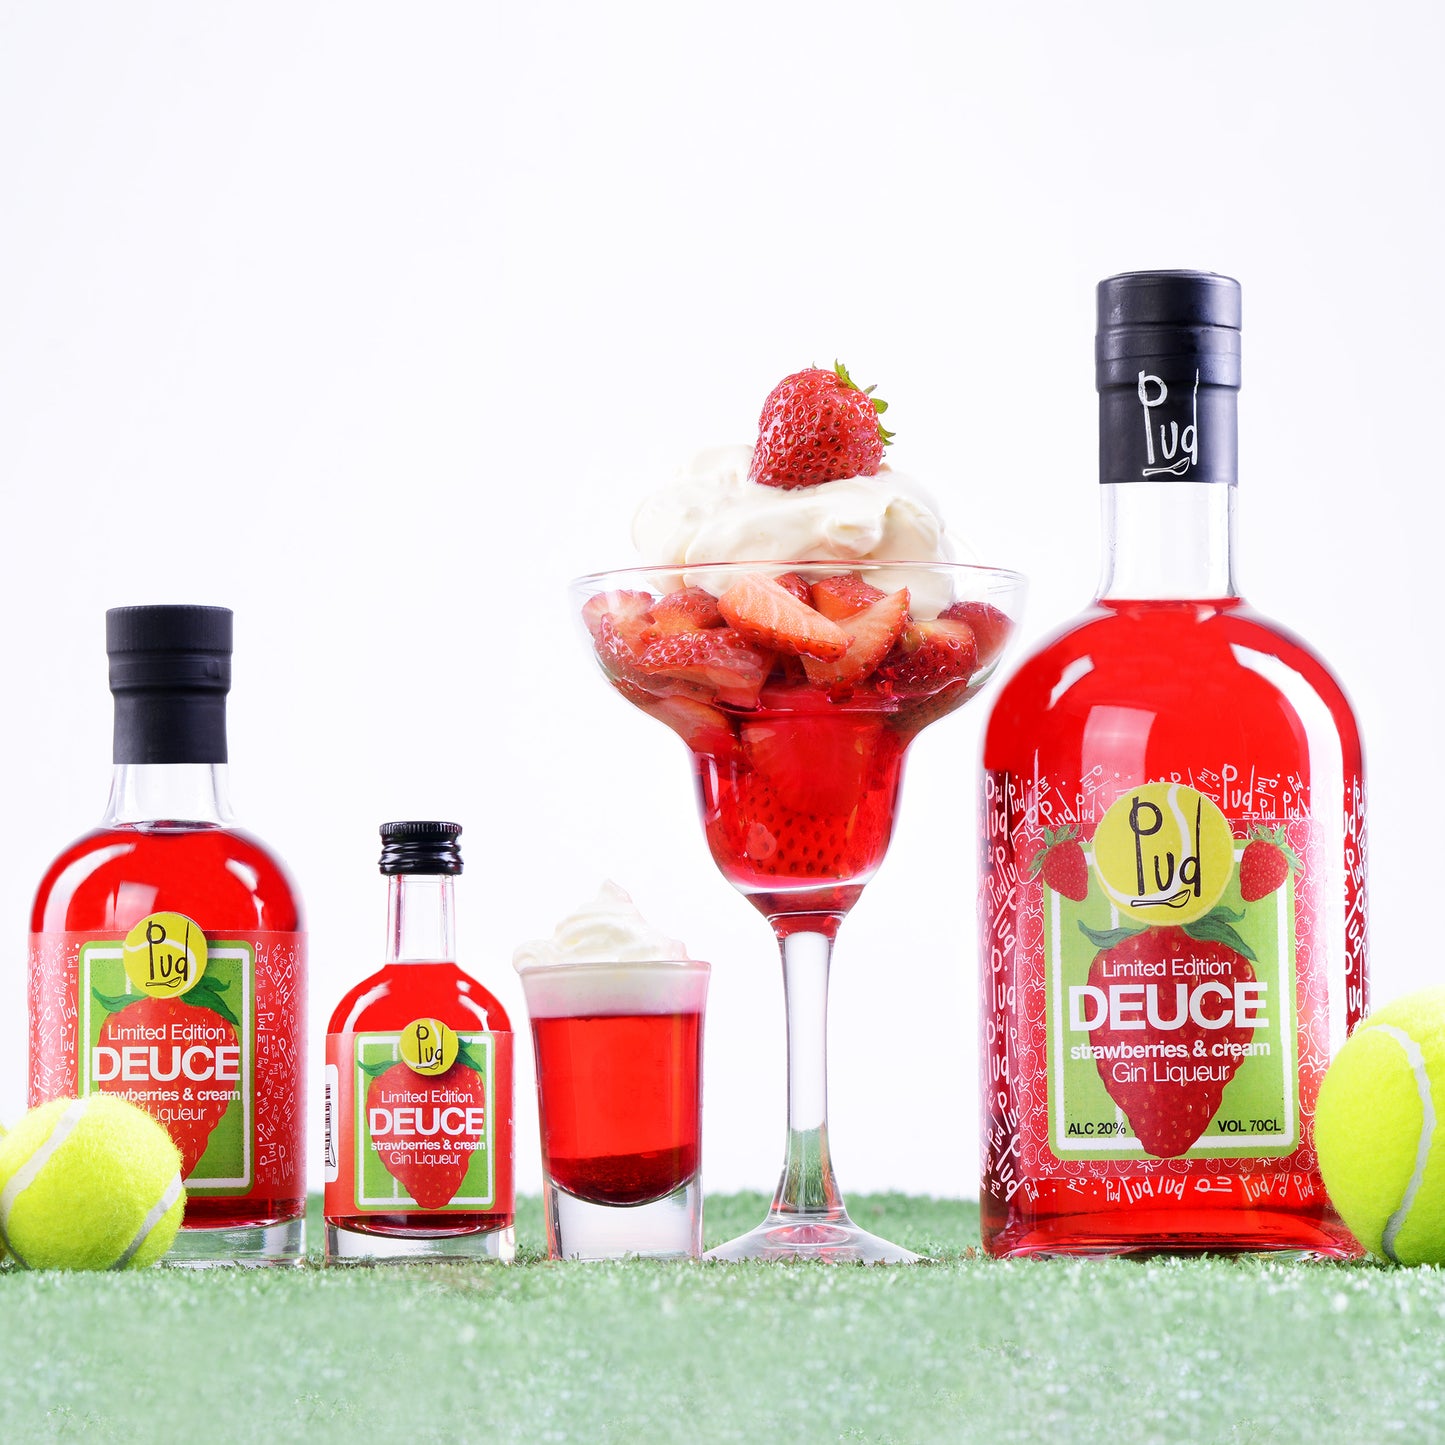 Pud Deuce Strawberries & Cream Gin Liqueur 70cl